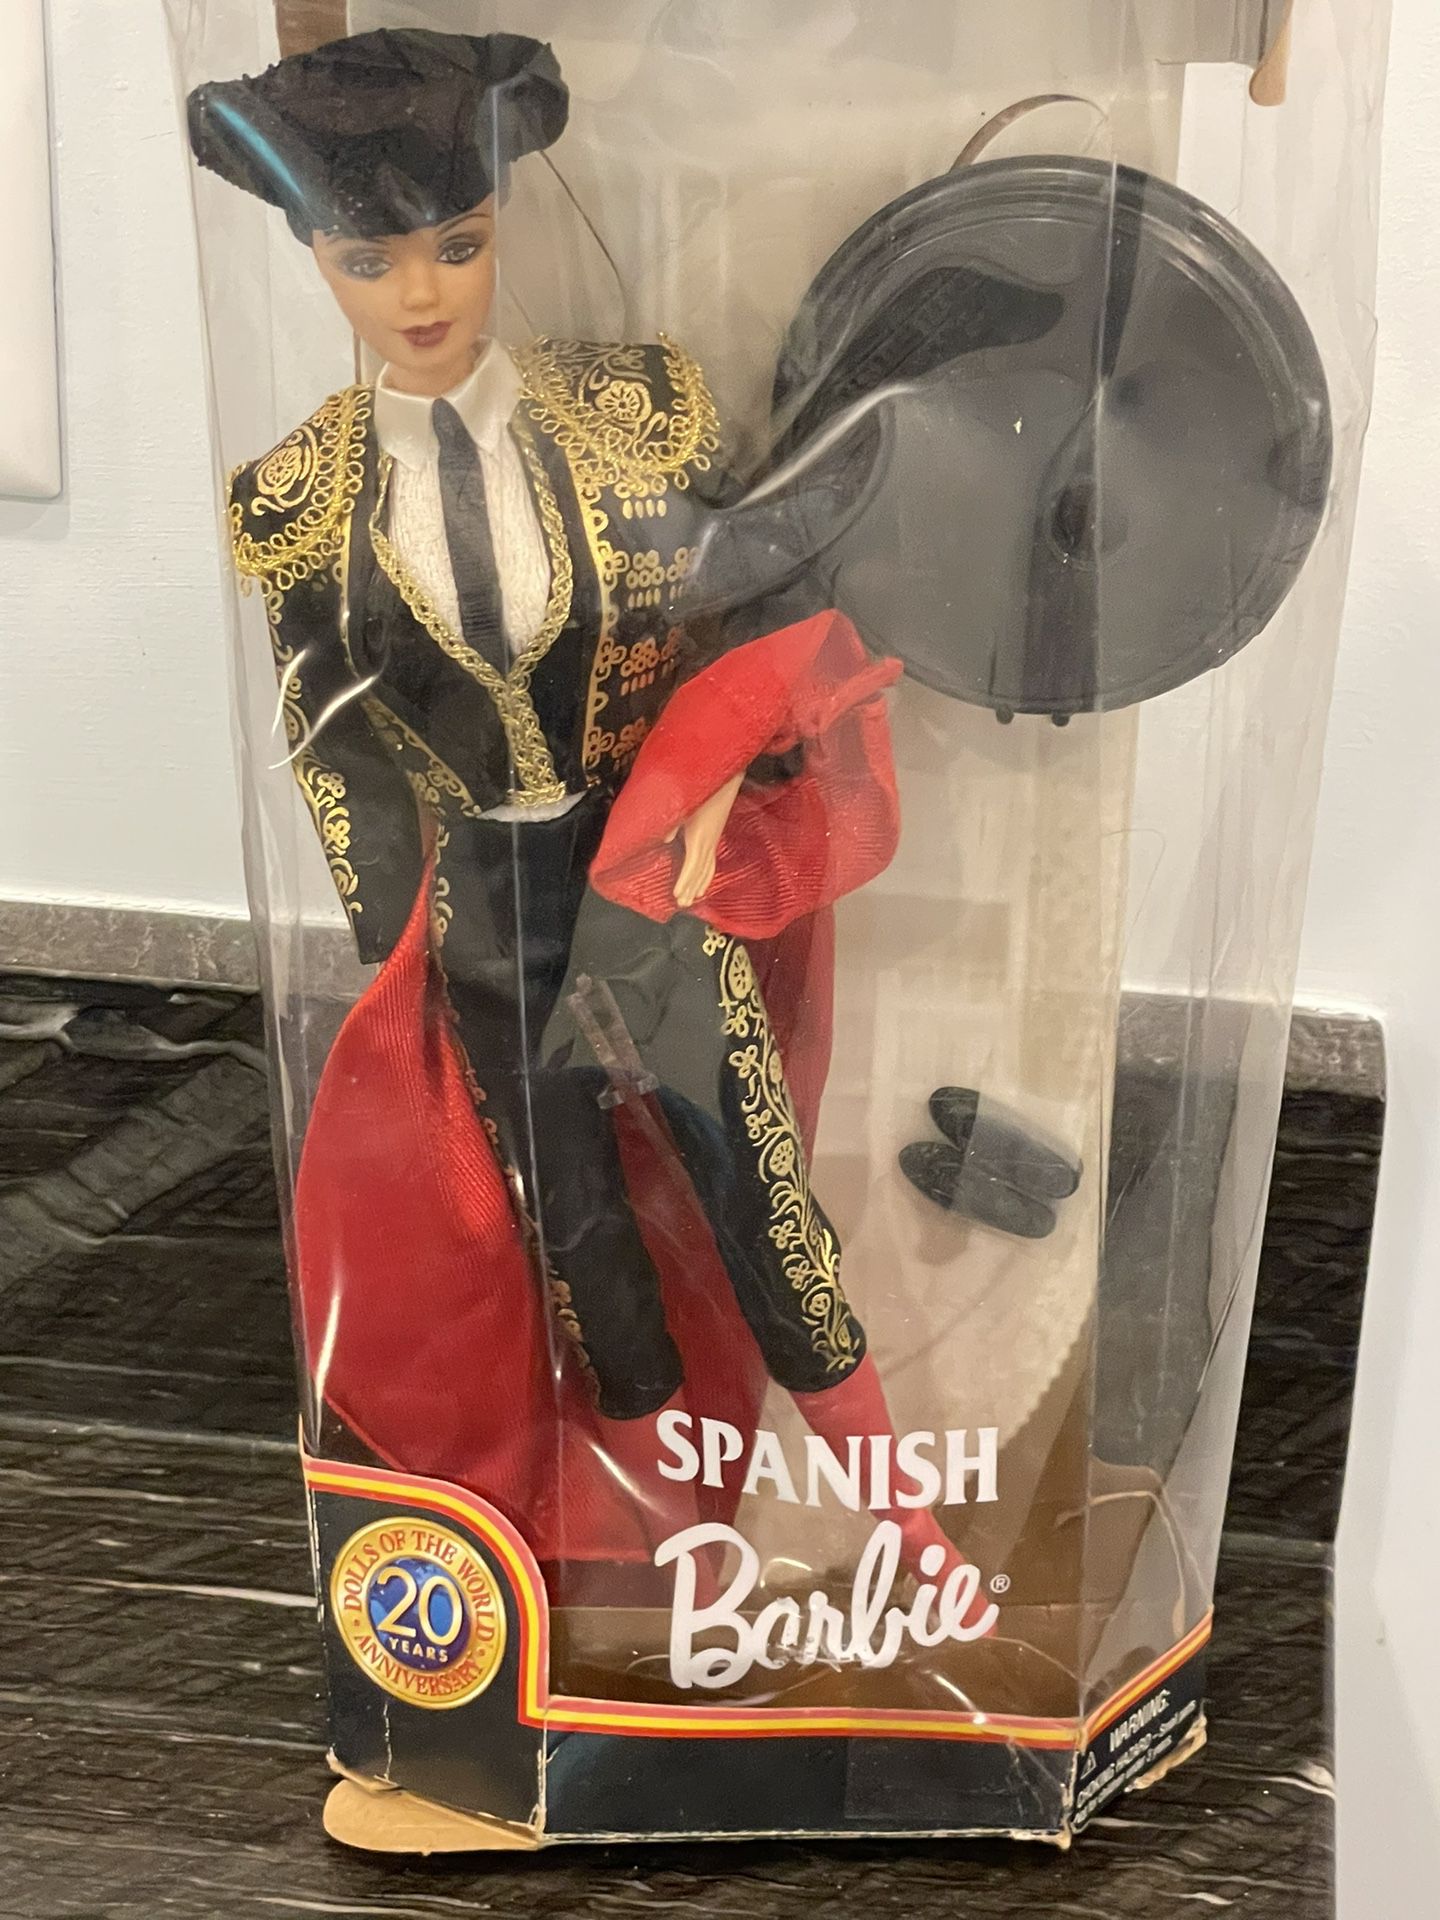 Spanish Barbie